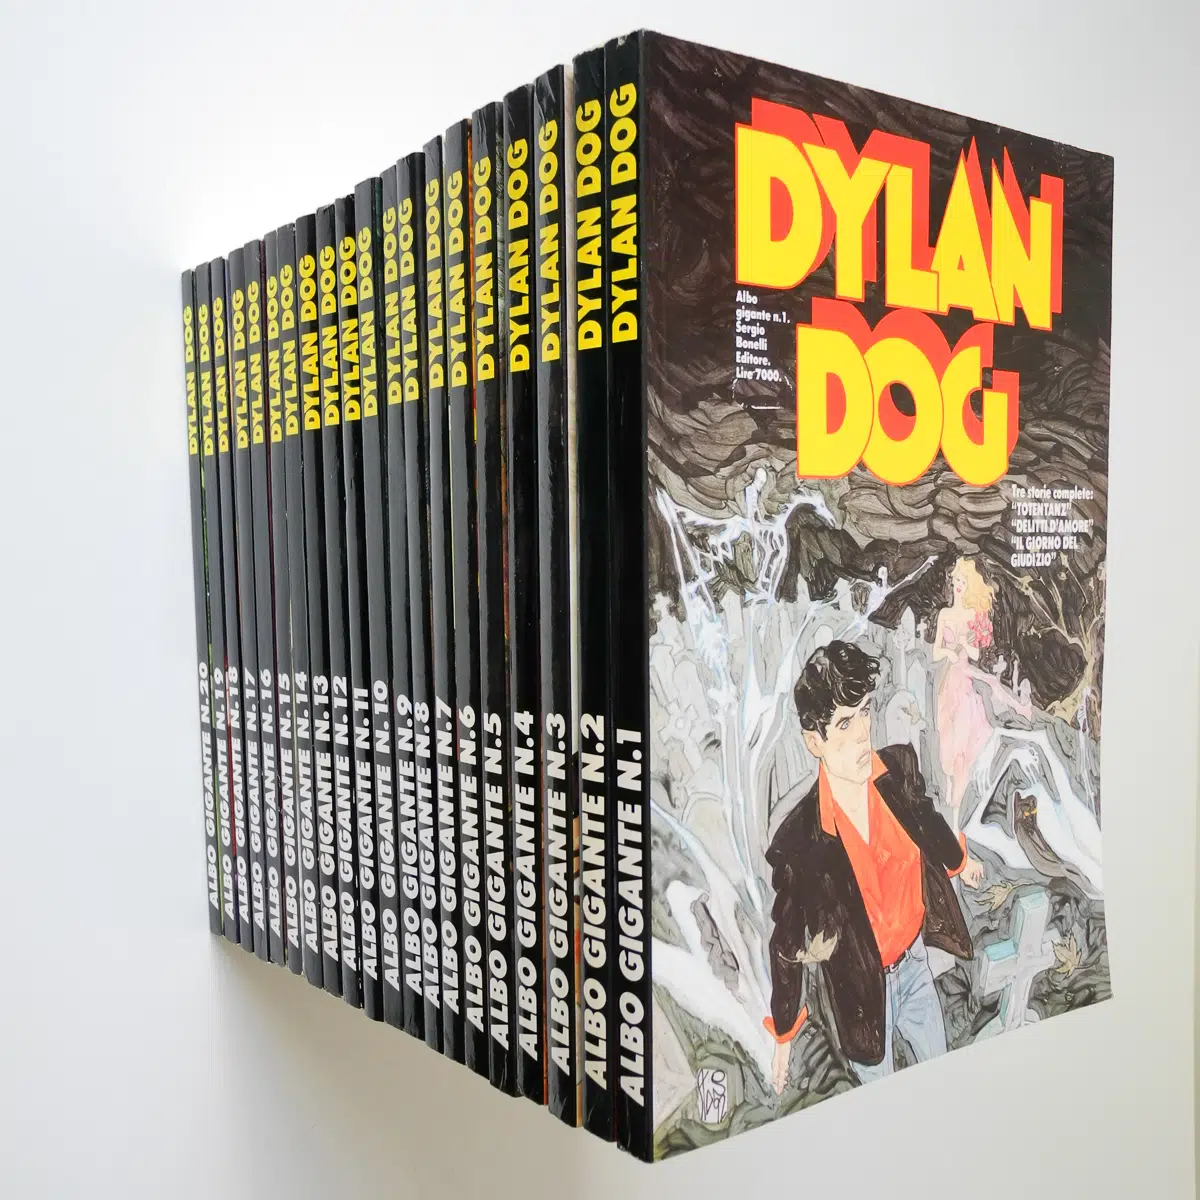 Dylan Dog Albo Gigante n. 1/20 Daim Press/Bonelli